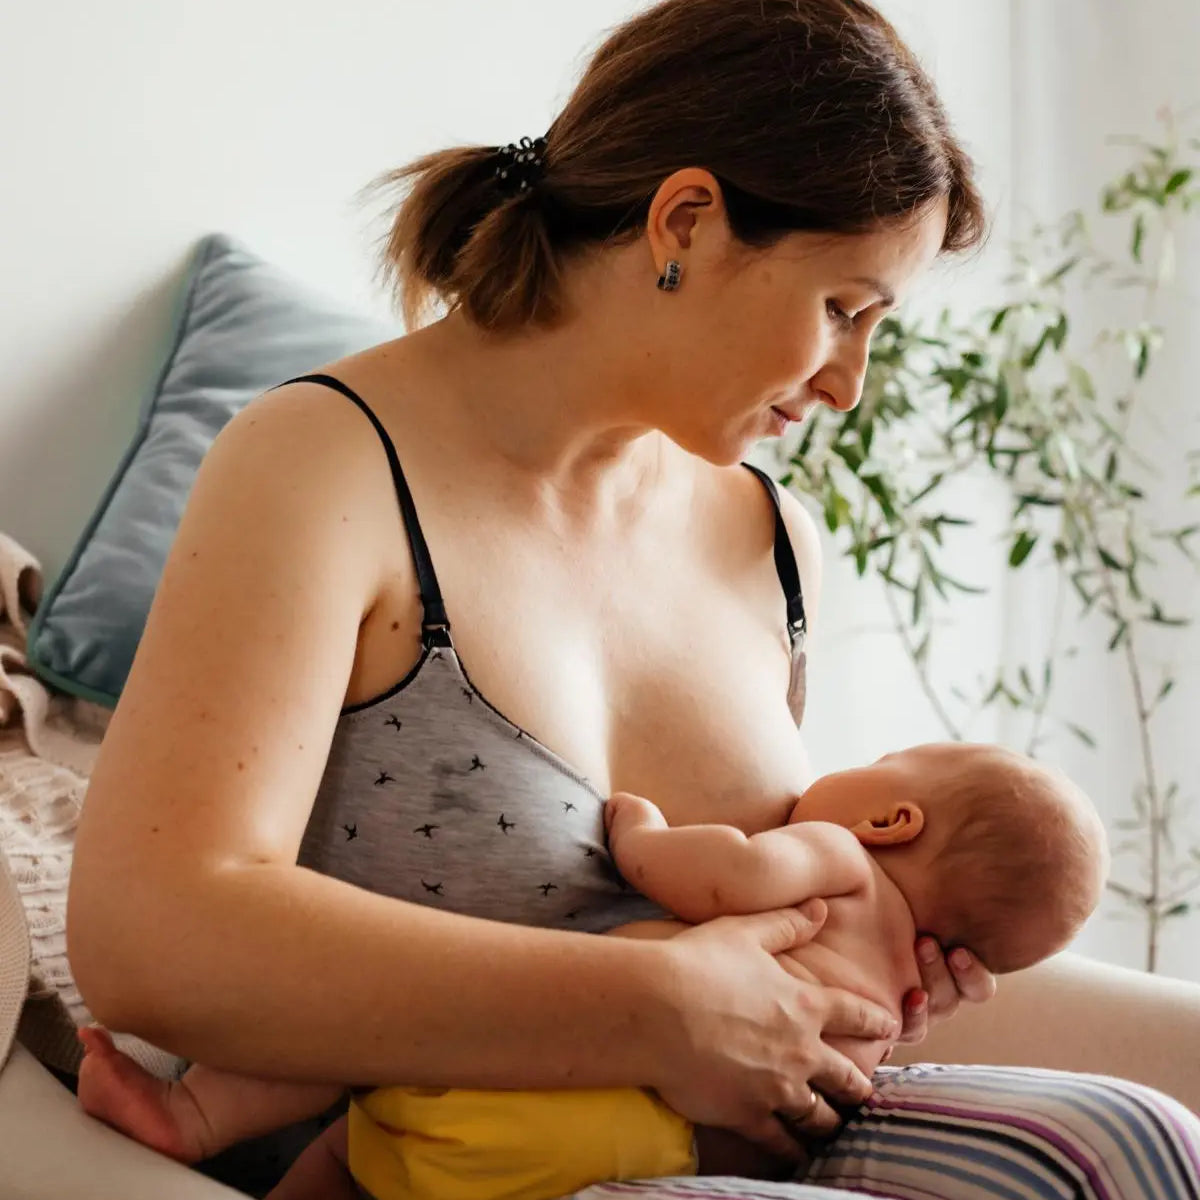 Mum branded 'self-important' for bizarre breastfeeding technique